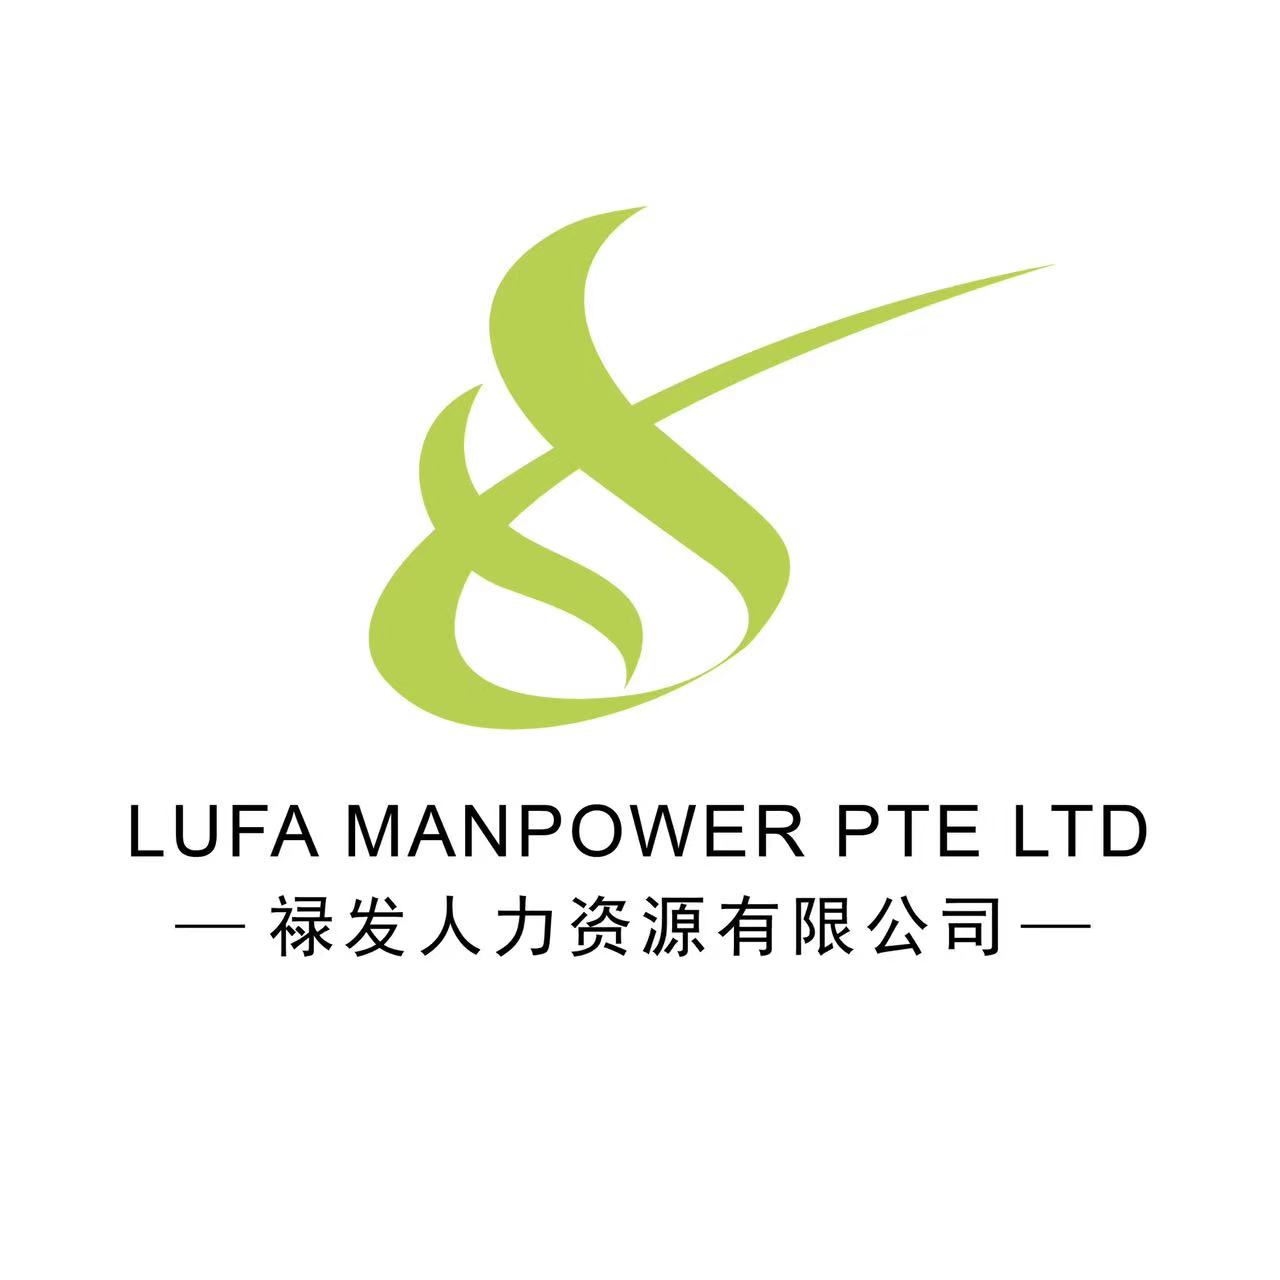 Lufa Manpower Pte. Ltd. logo